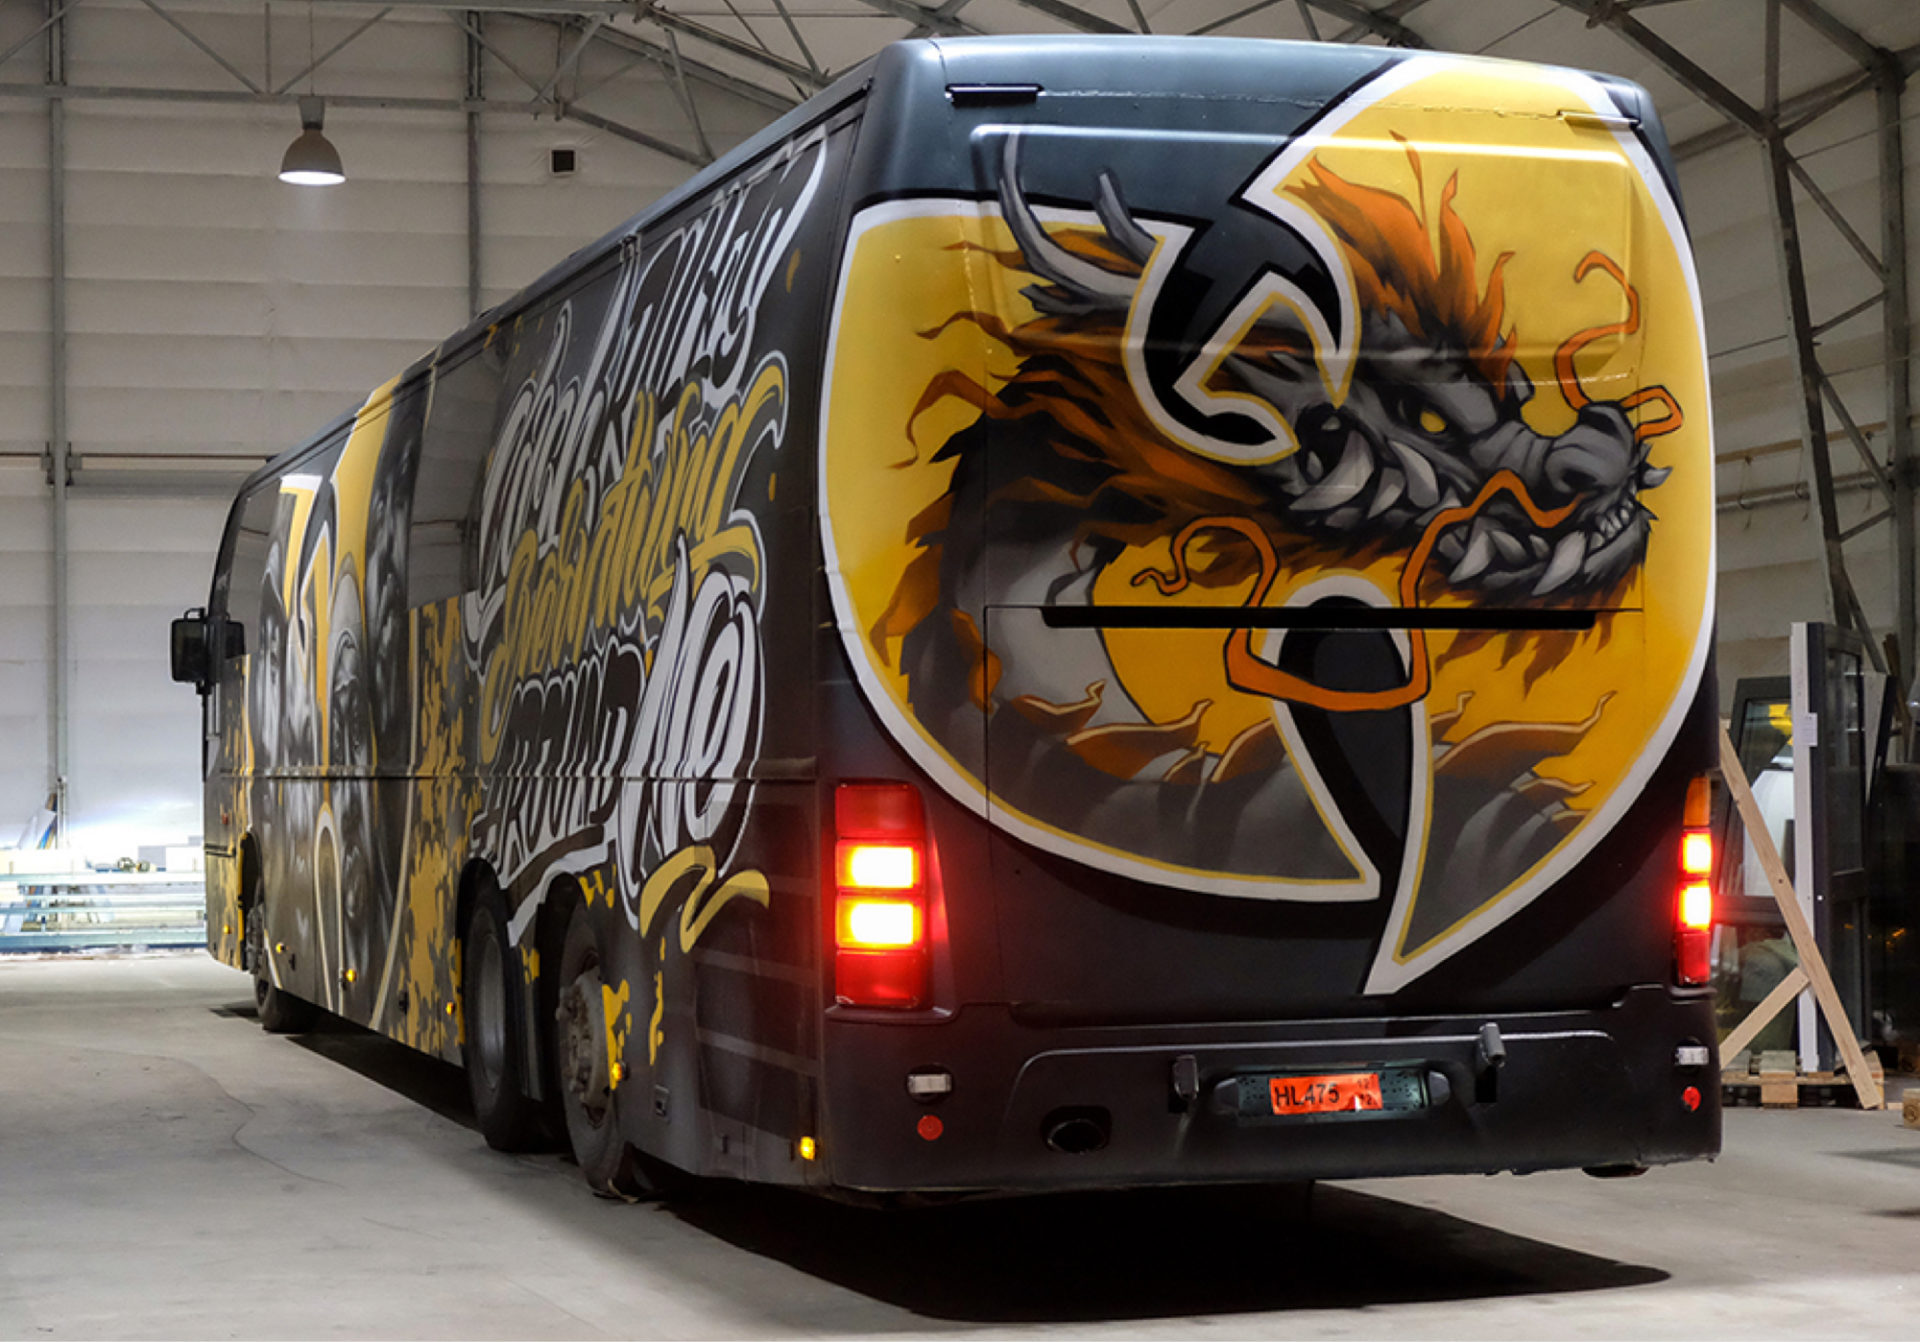 Wu-Tang Clan Graffiti Bus - Mezzo